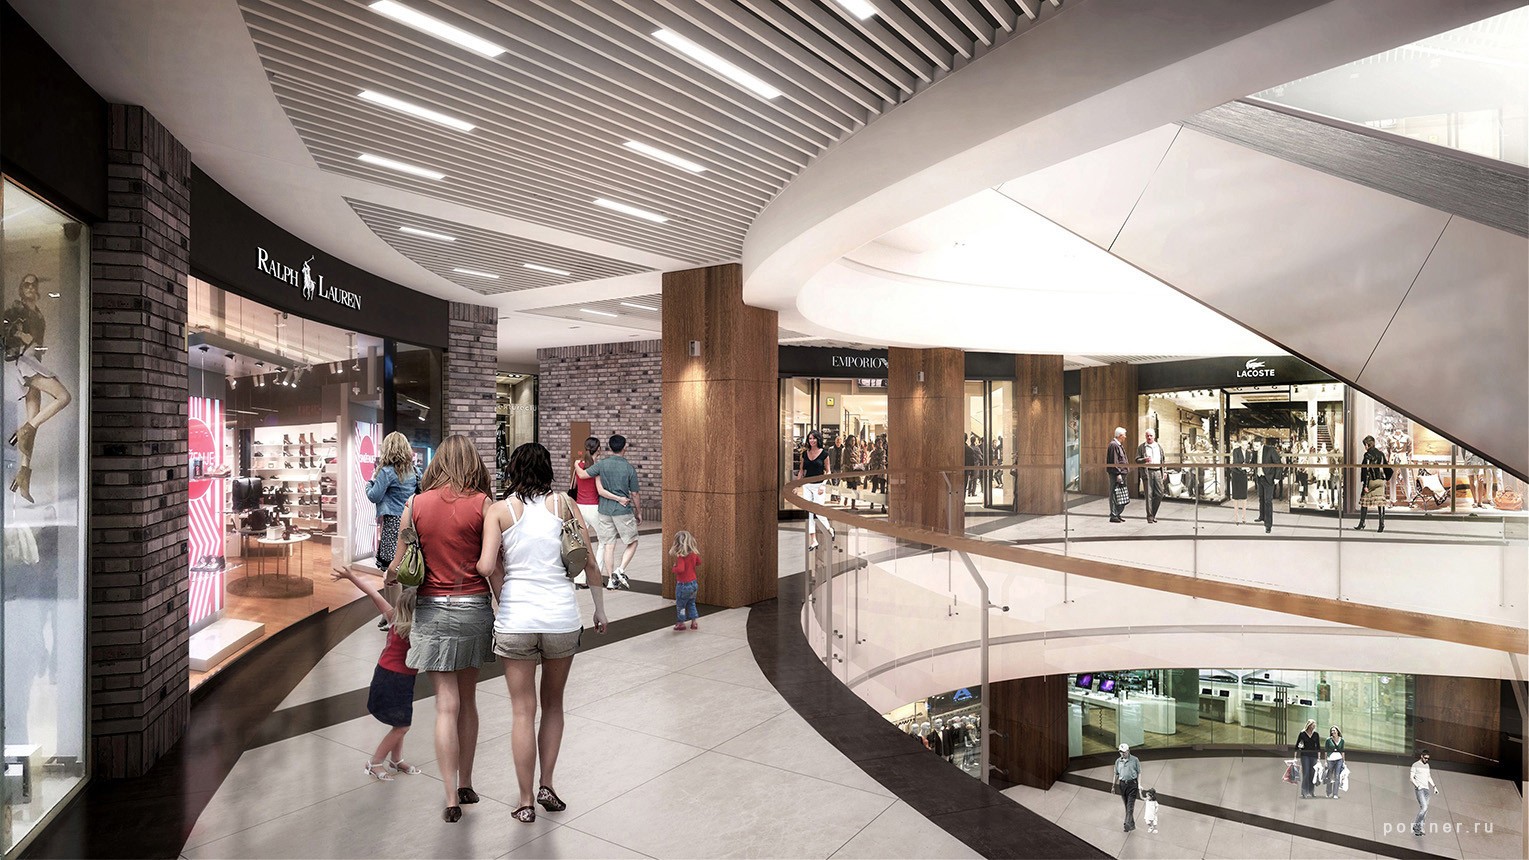 Interior of Shopping centre "Lavanda Mall"